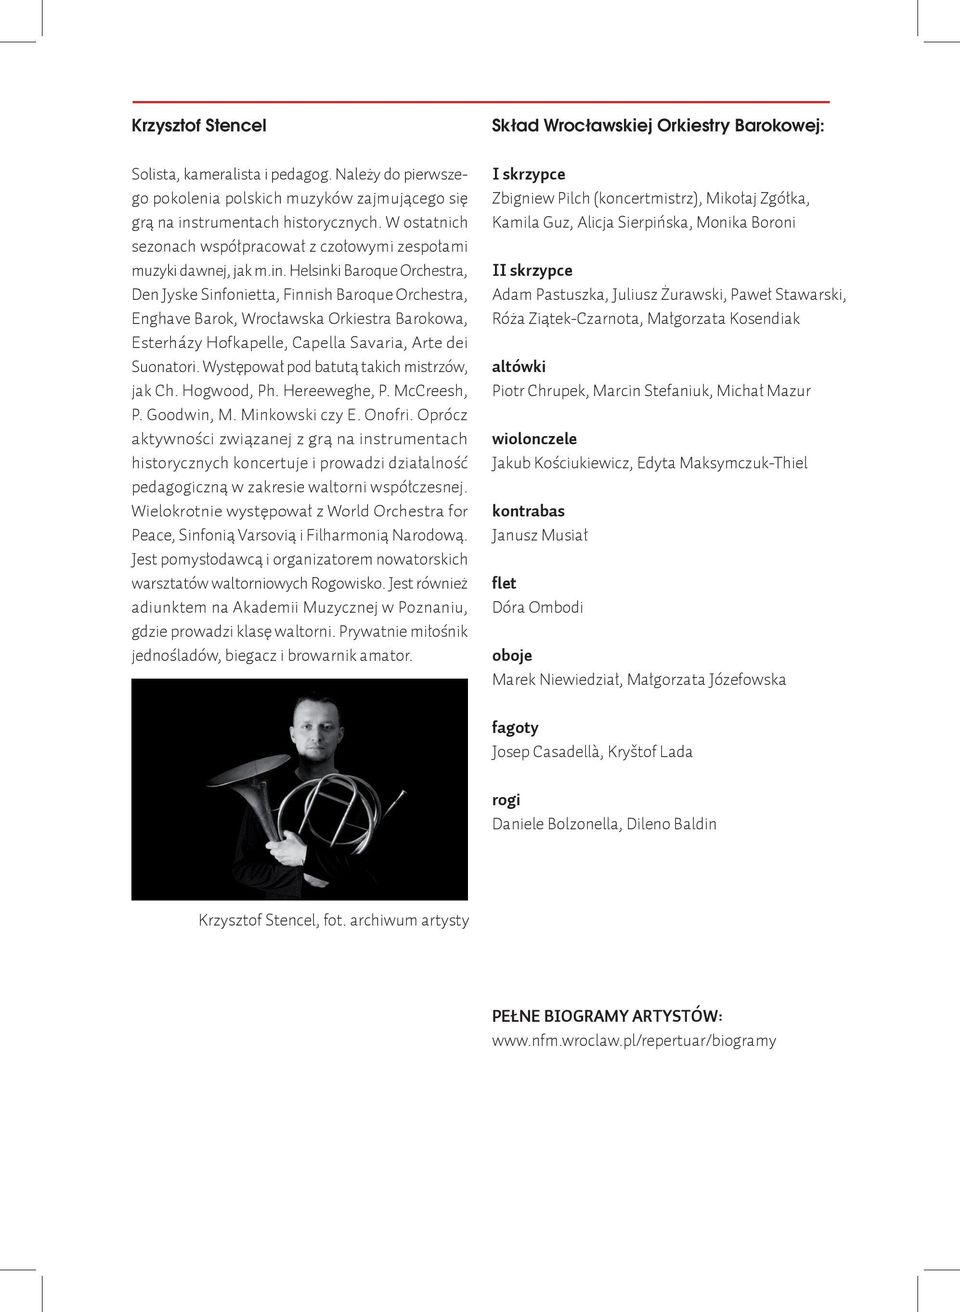 Helsinki Baroque Orchestra, Den Jyske Sinfonietta, Finnish Baroque Orchestra, Enghave Barok, Wrocławska Orkiestra Barokowa, Esterházy Hofkapelle, Capella Savaria, Arte dei Suonatori.